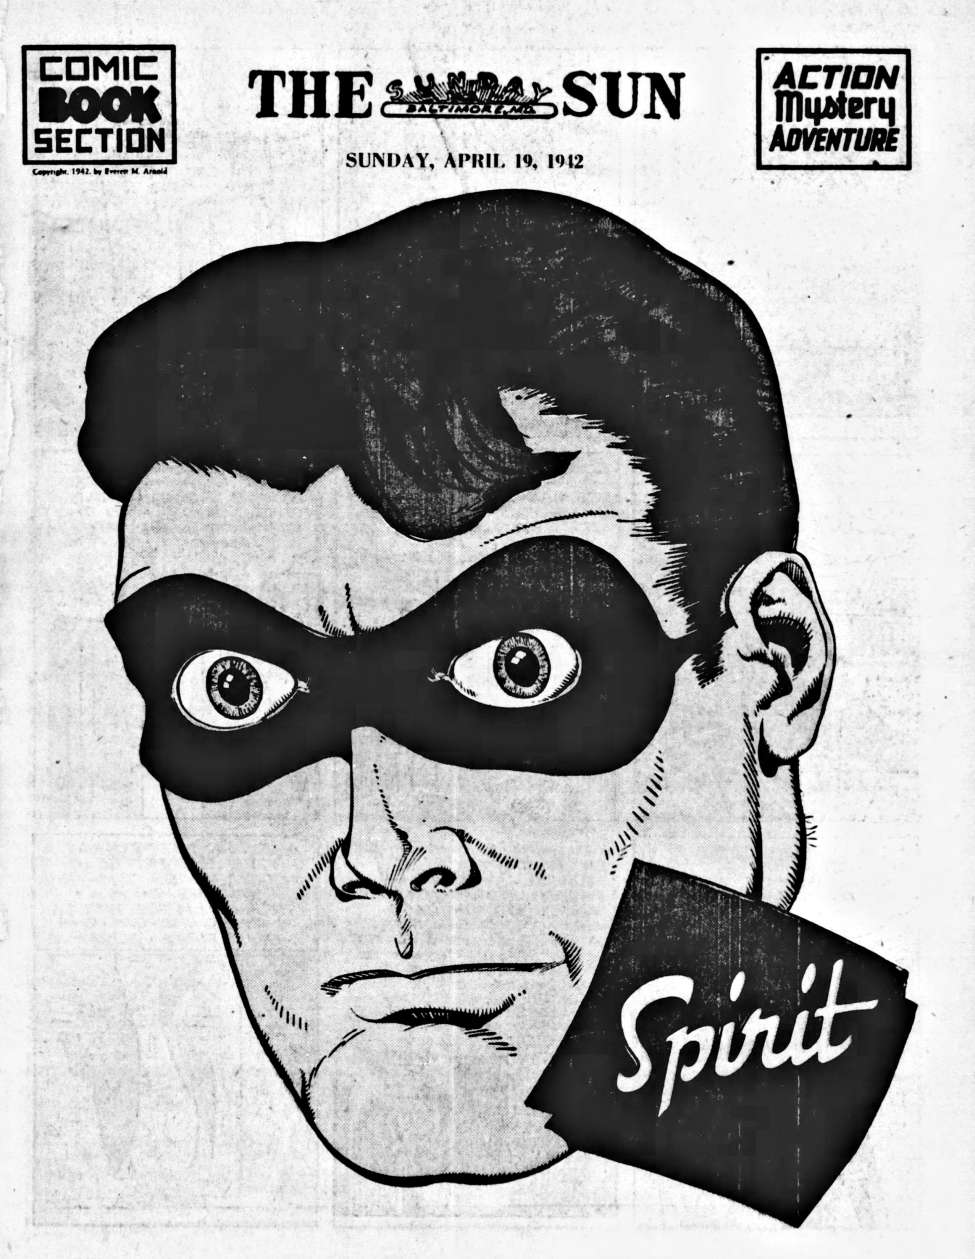 Comic Book Cover For The Spirit (1942-04-19) - Baltimore Sun (b/w)